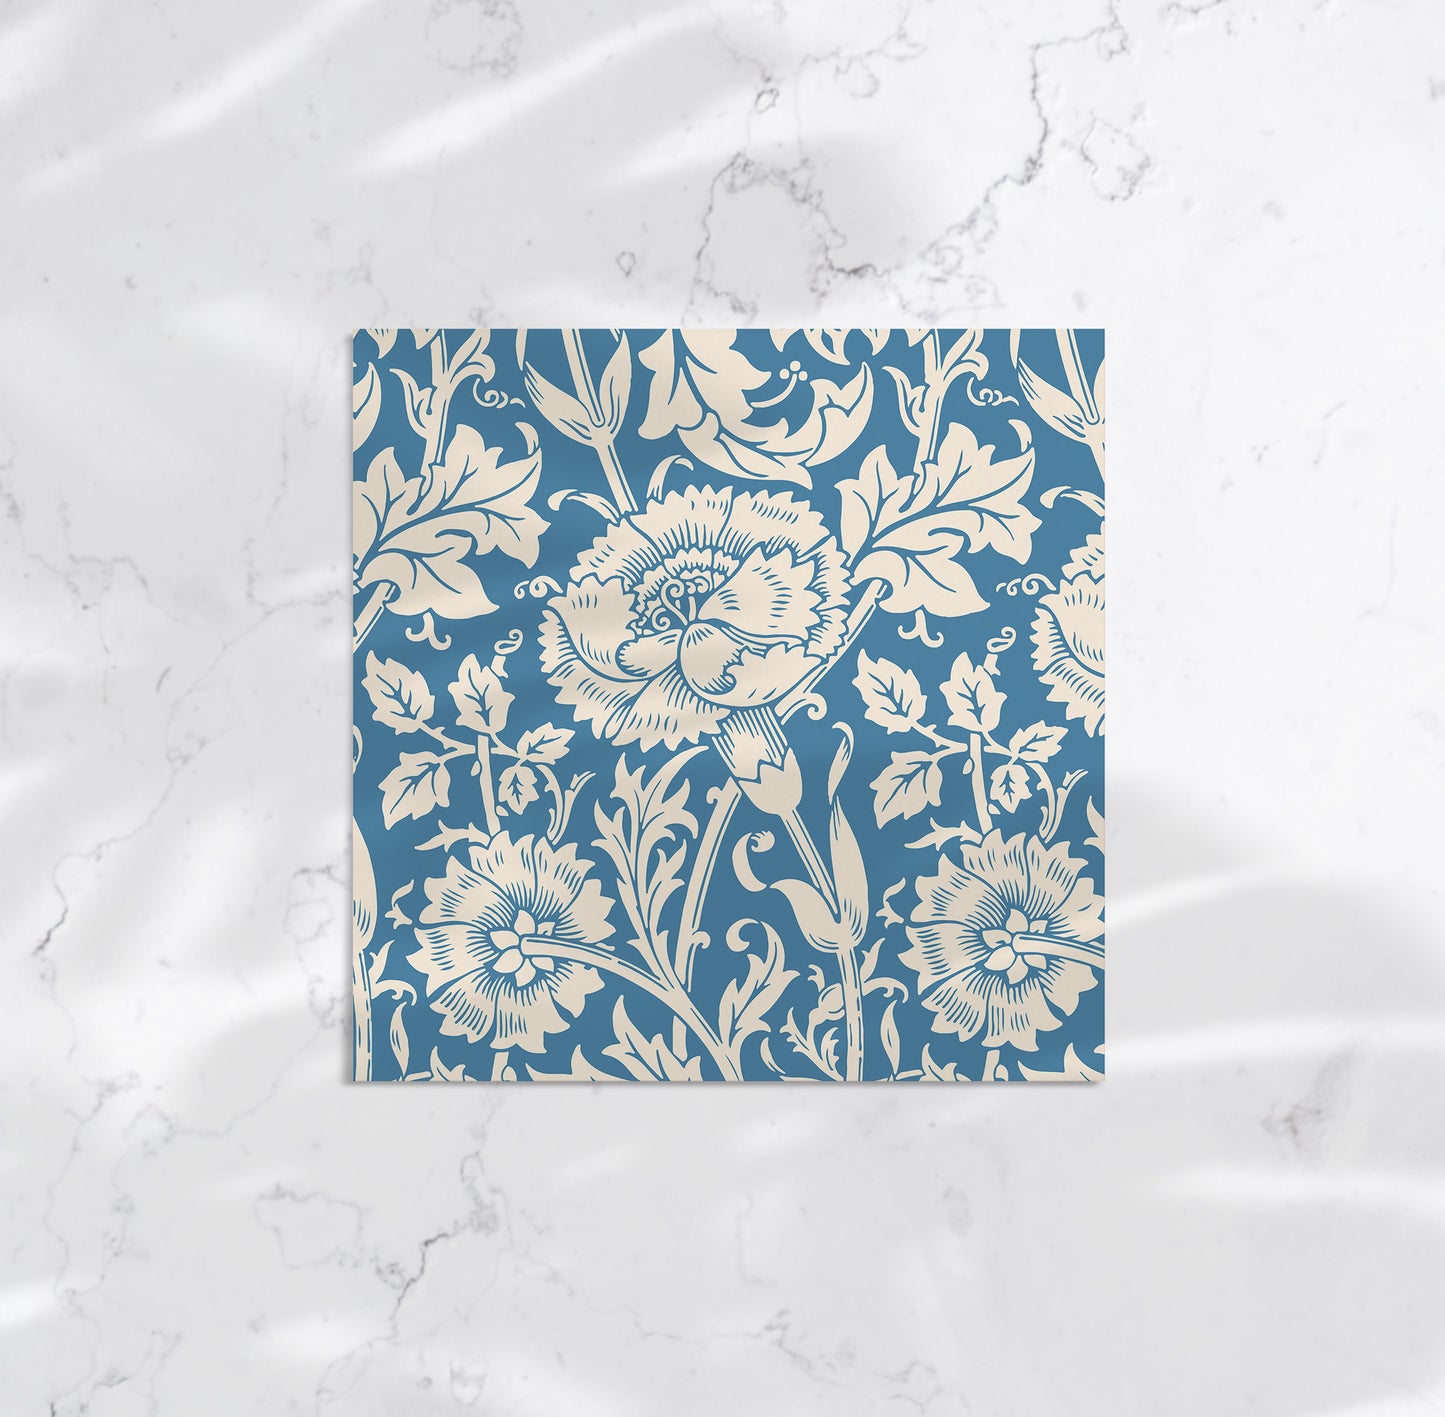 Blue Floral Art Print